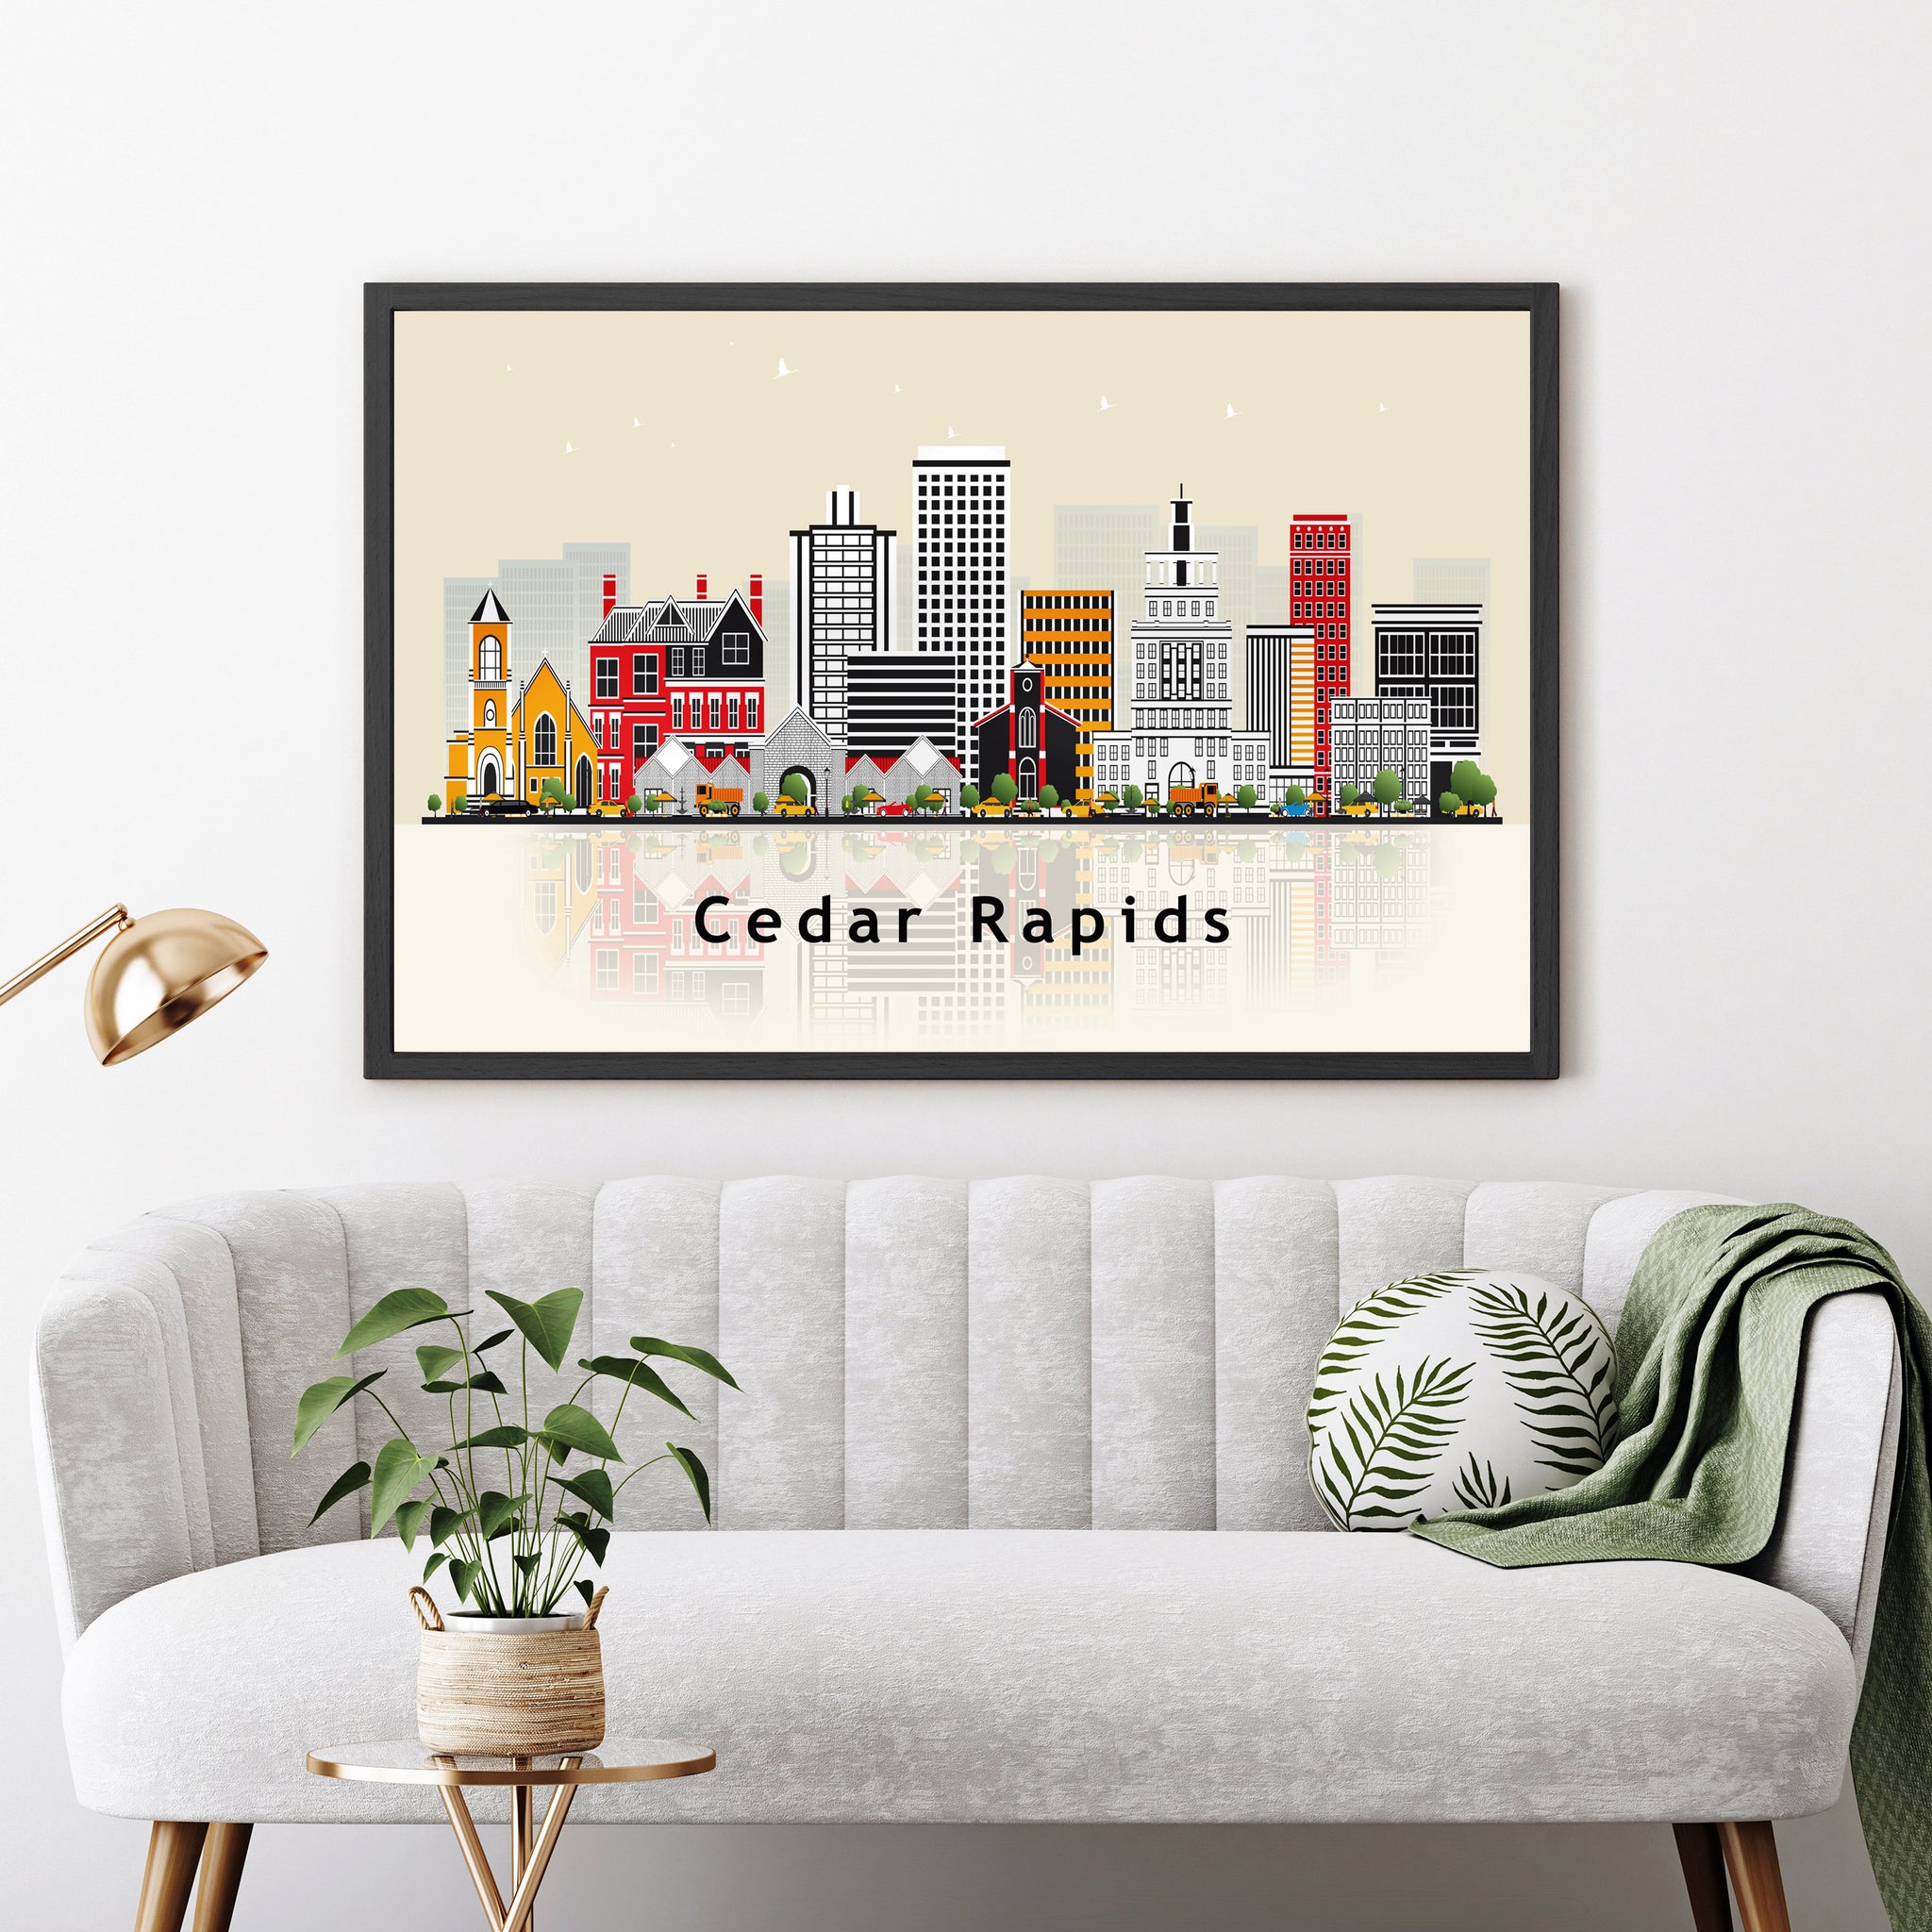 CEDAR RAPIDS IOWA Illustration skyline poster, Iowa State modern skyline cityscape poster, Landmark art print, Home decoration idea